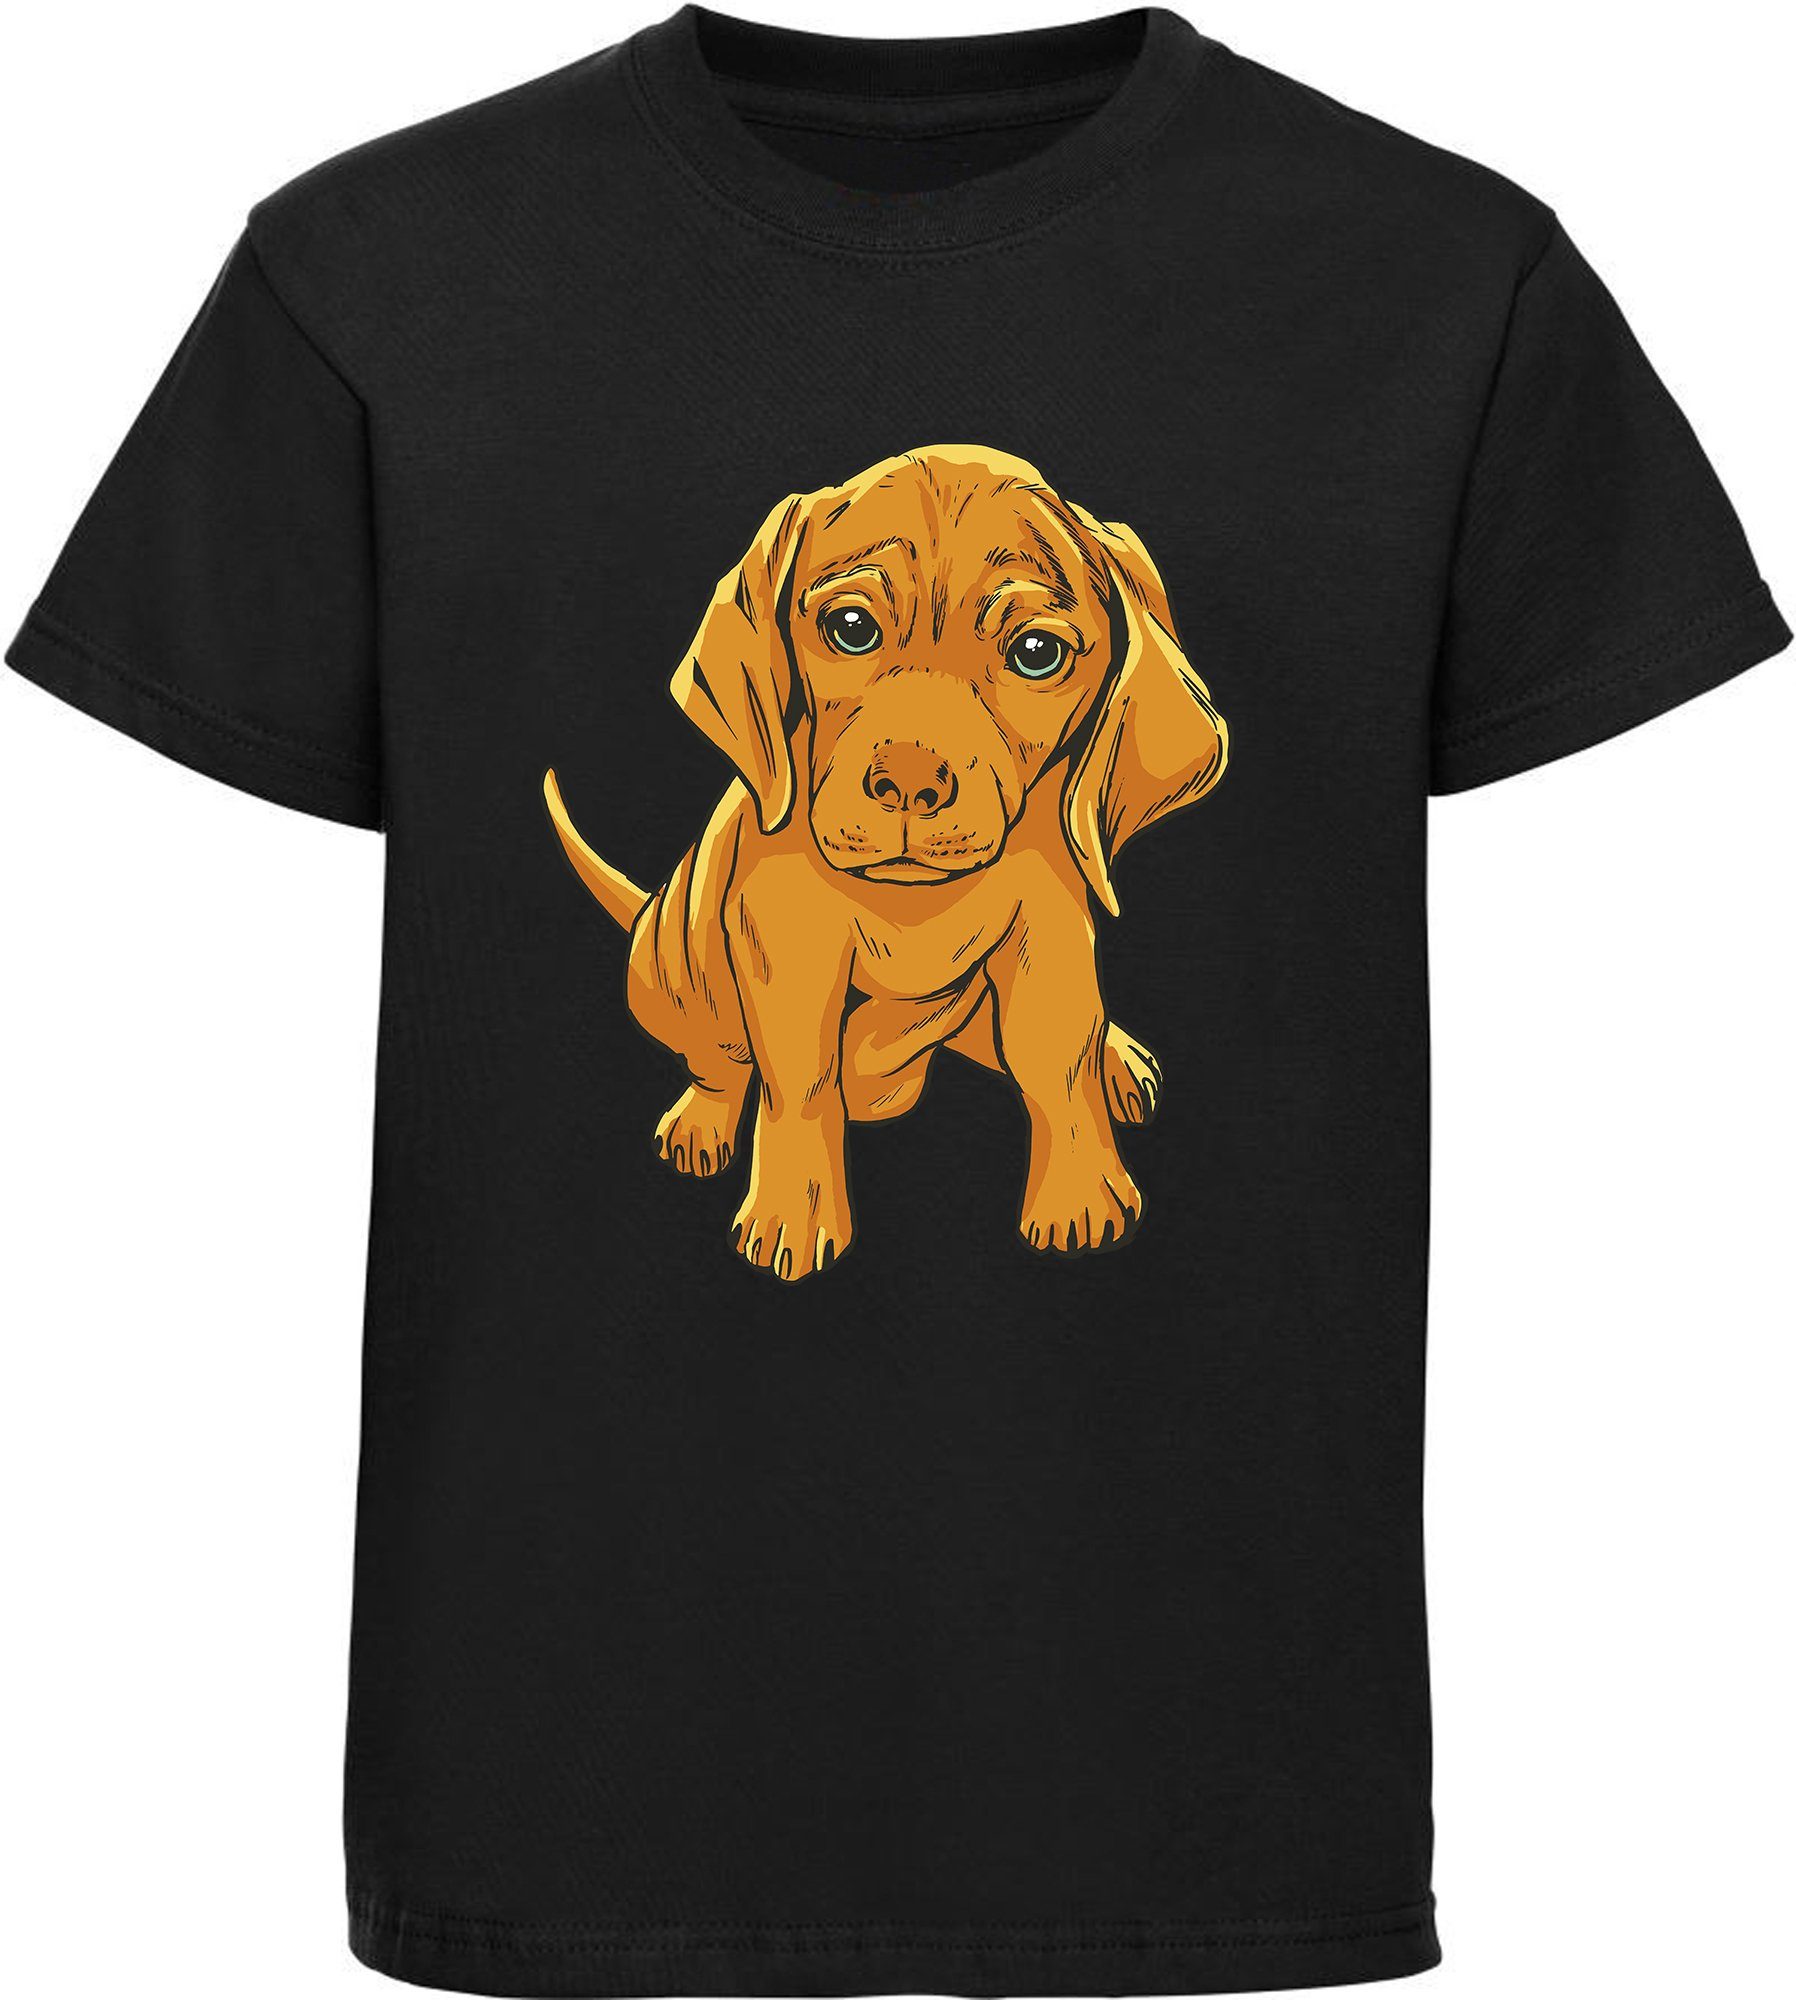 MyDesign24 Print-Shirt Kinder Welpe T-Shirt Baumwollshirt Süßer - Hunde bedruckt mit Aufdruck, schwarz i230